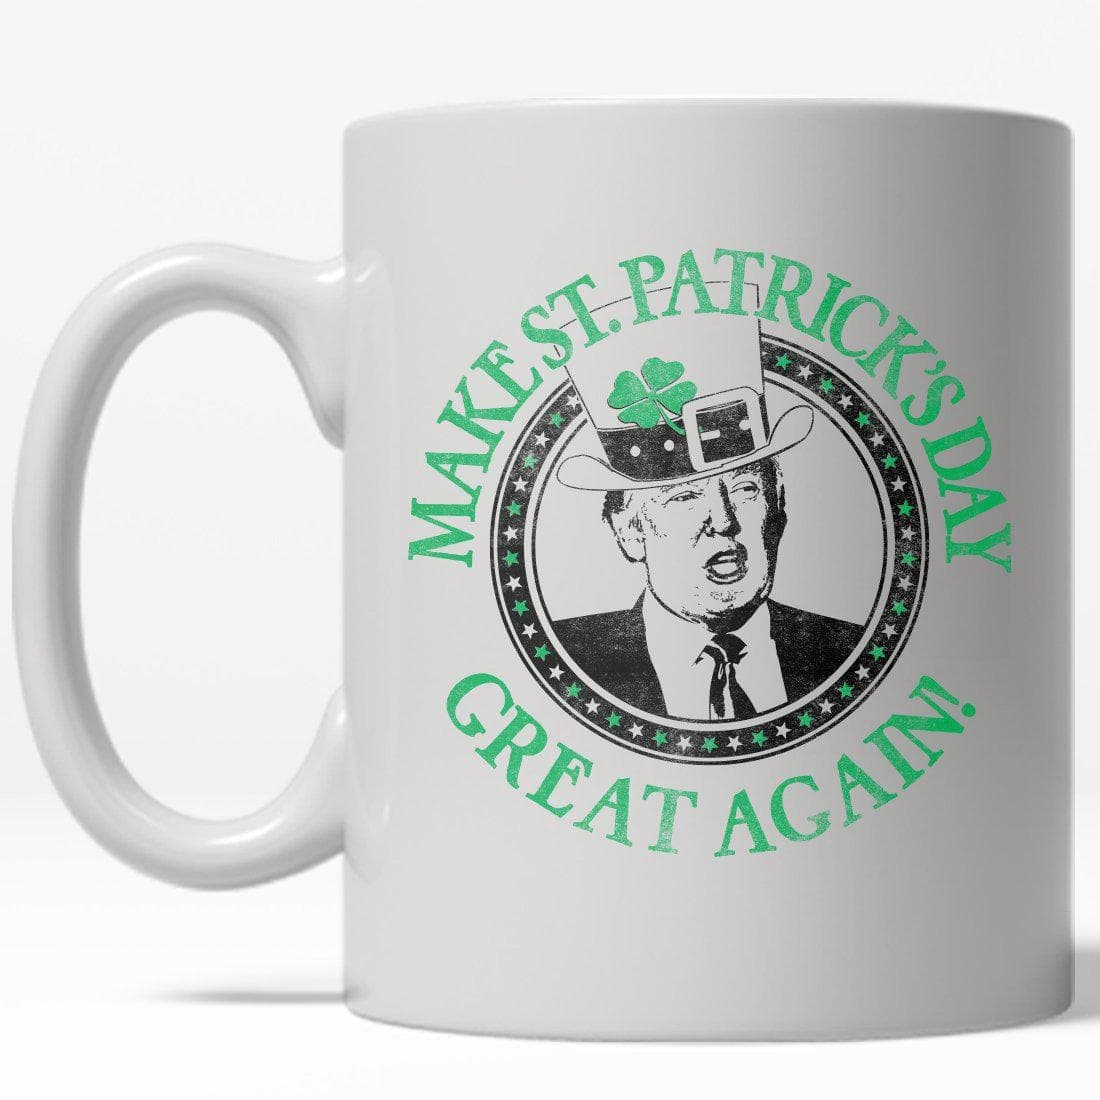 Make St. Pattie's Day Great Again Mug - Crazy Dog T-Shirts